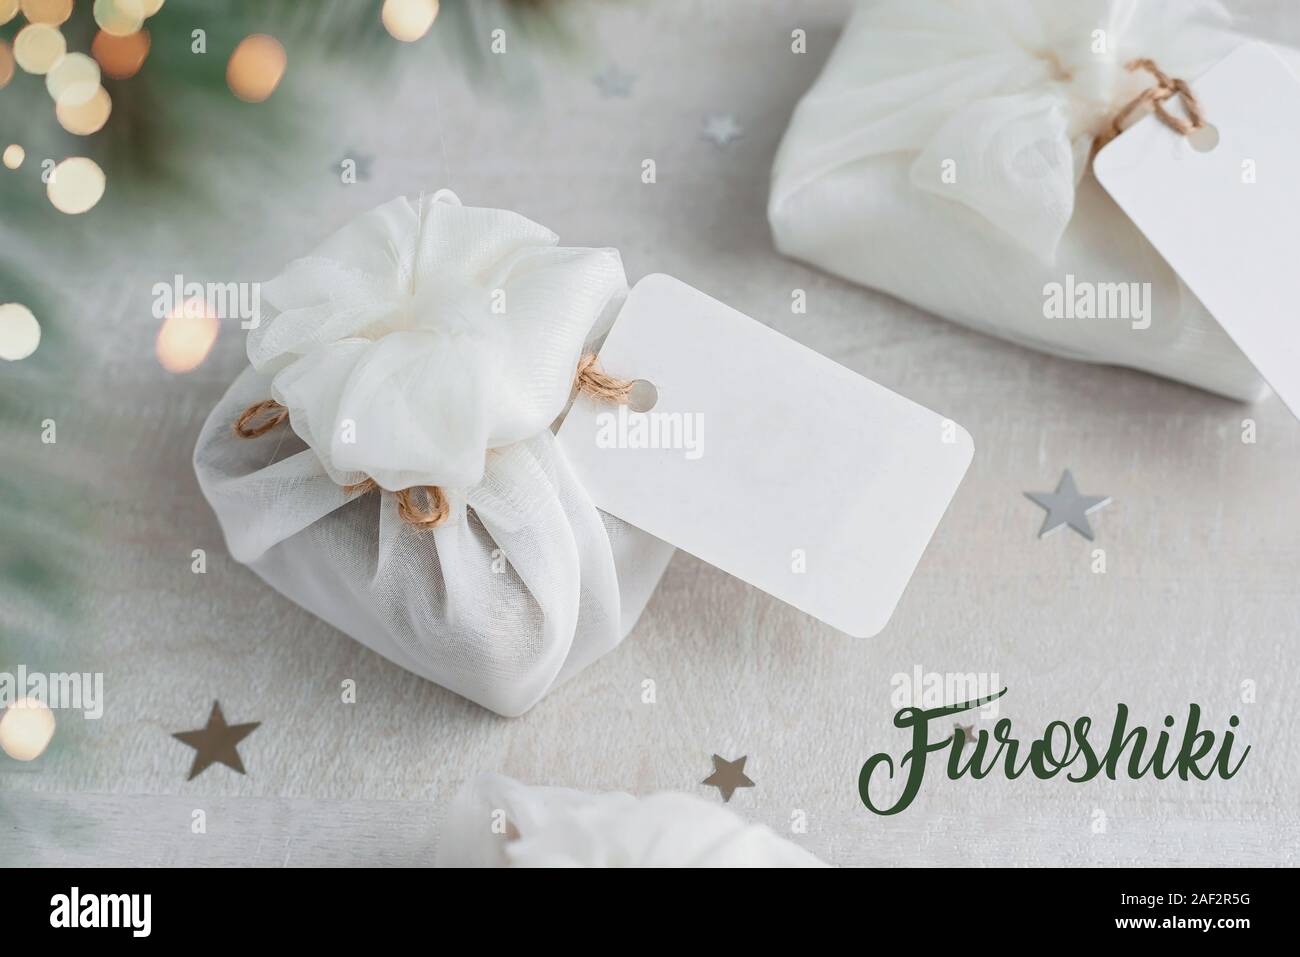 Regalo de navidad envuelto con tela furoshiki blanco con etiquetas. Eco friendly regalo. Foto de stock